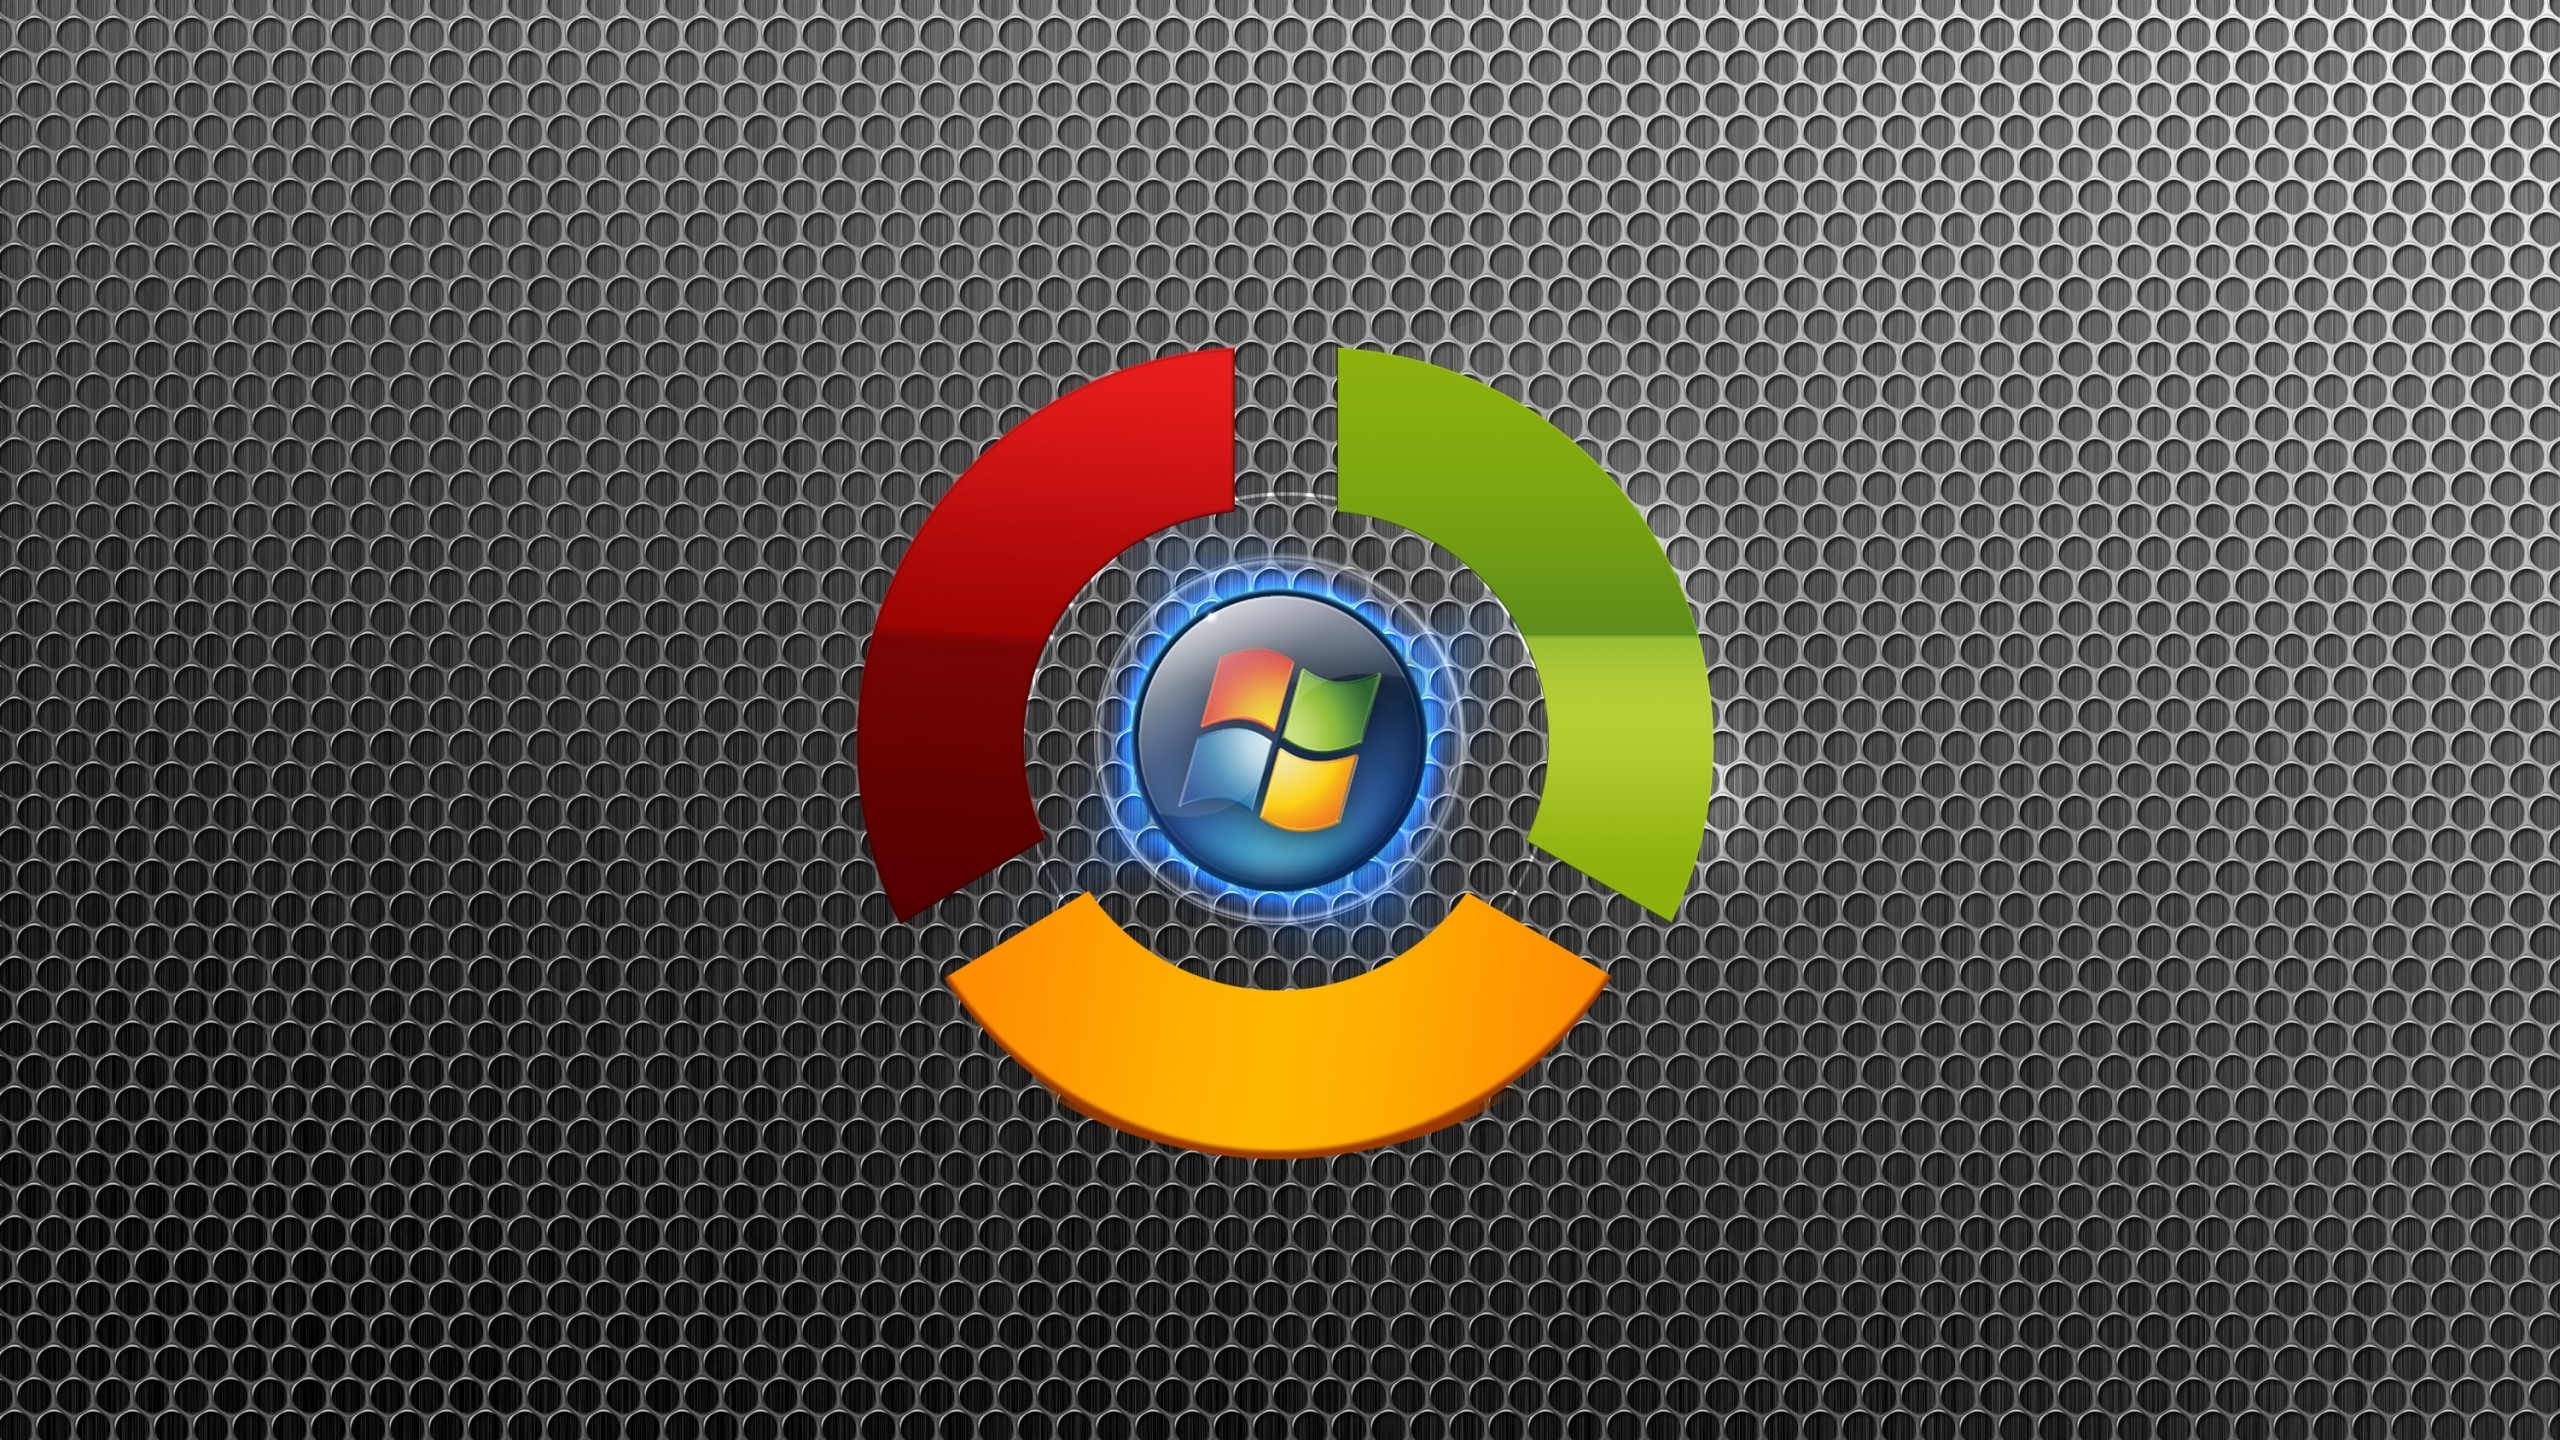 Google Chrome and Windows for 2560x1440 HDTV resolution